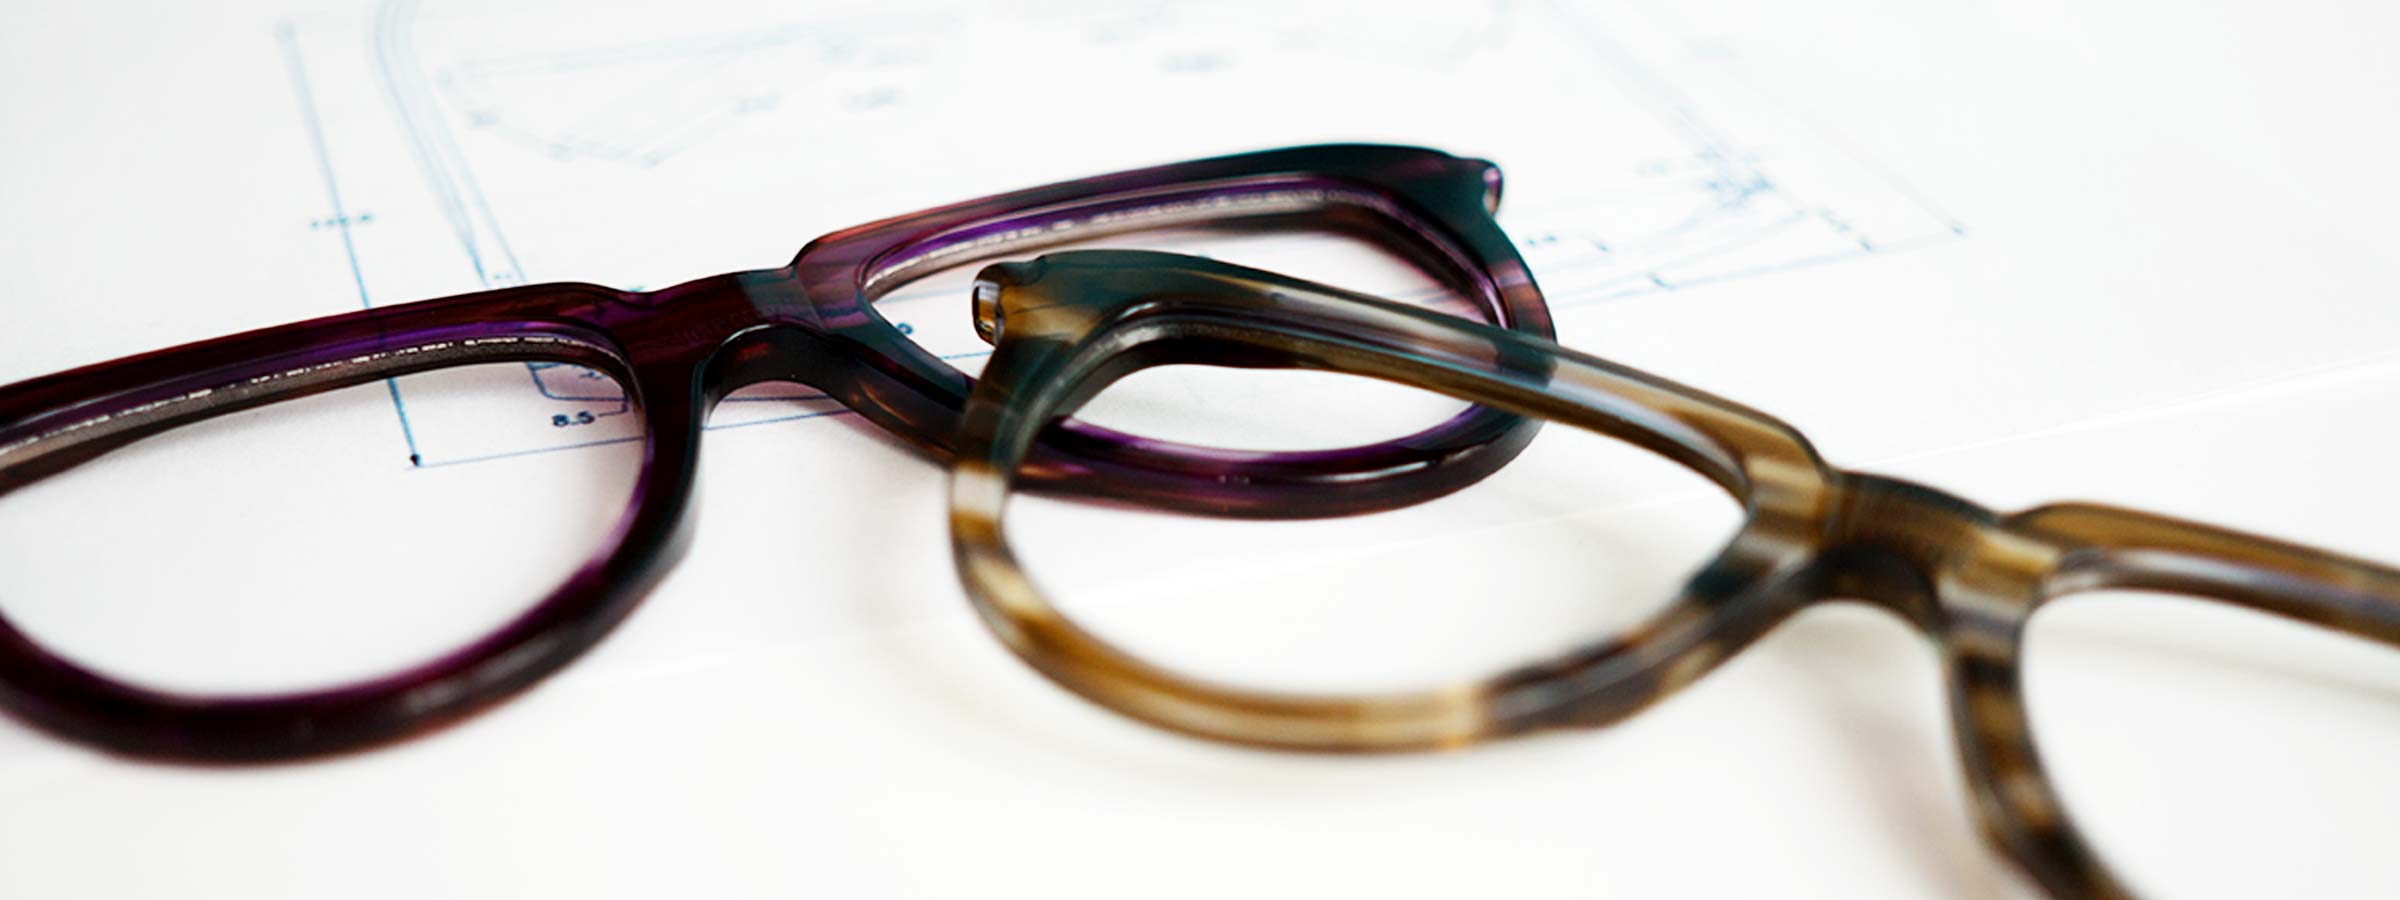 Glasses frame parts lying on a design sheet